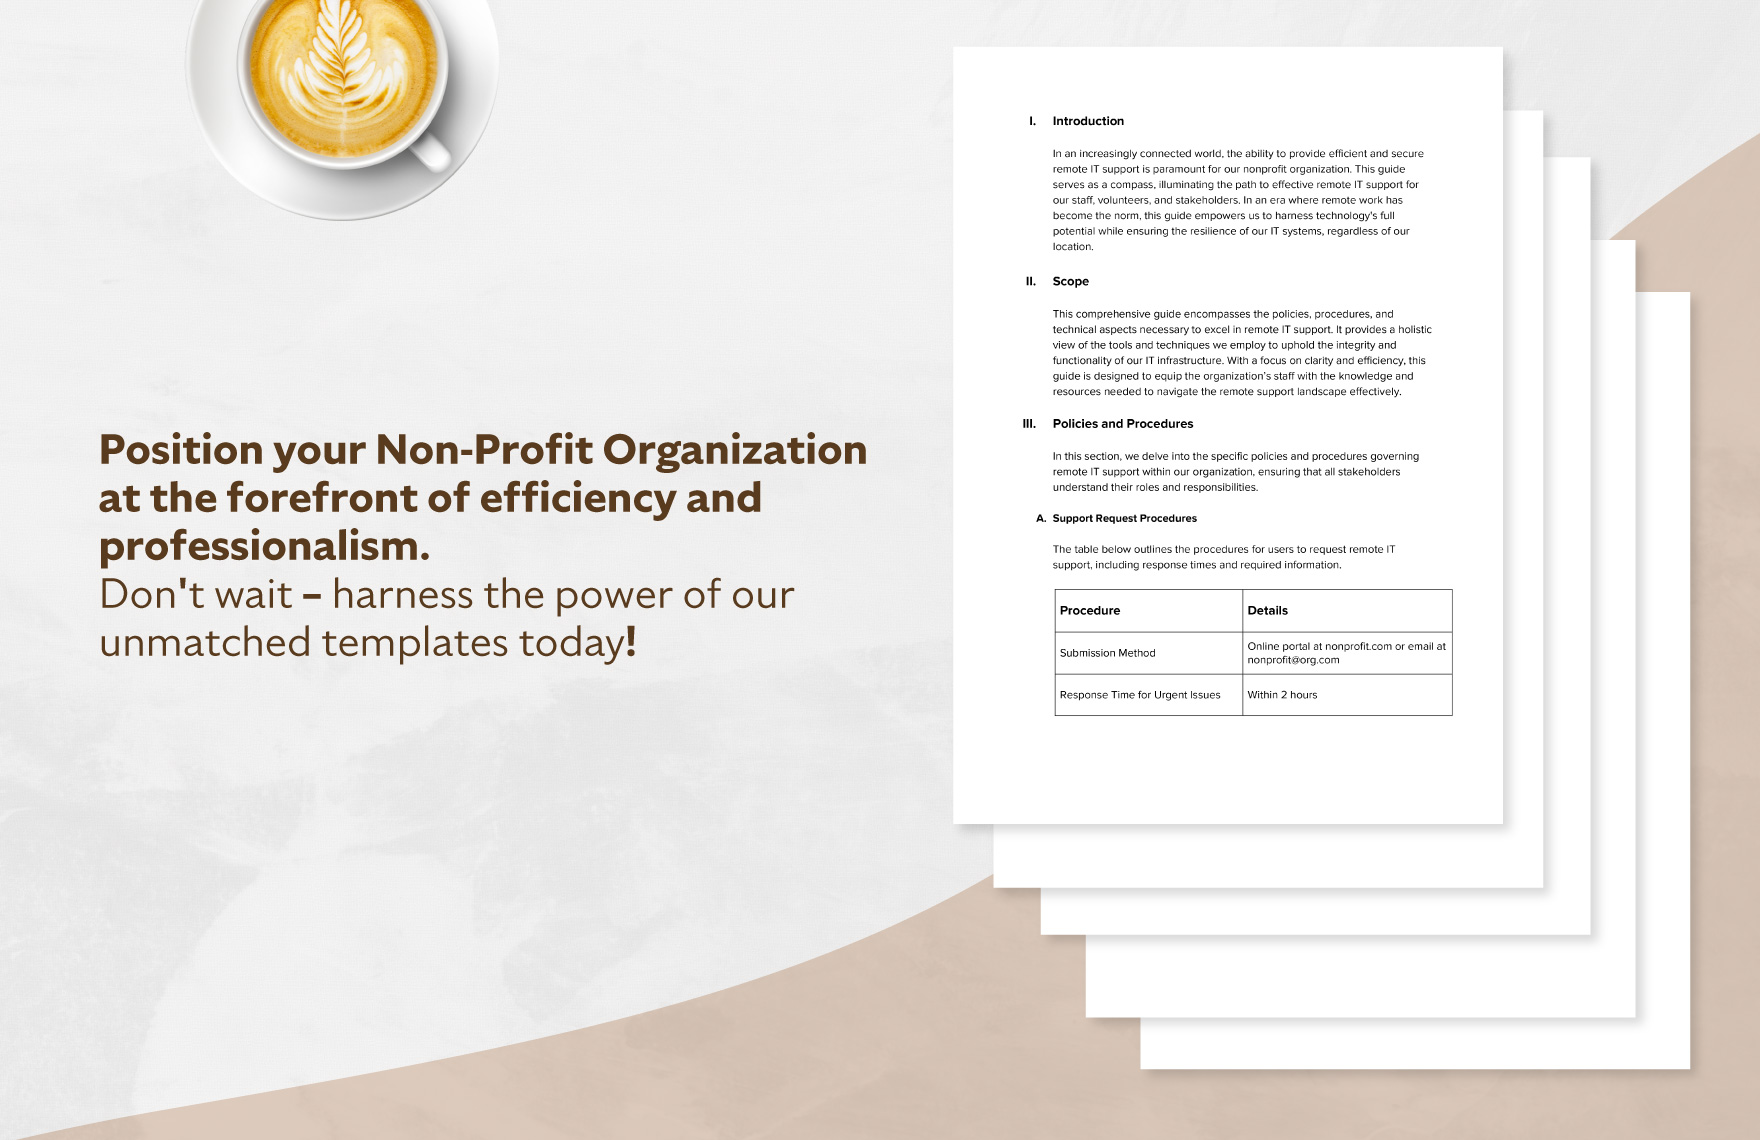 Nonprofit Organization IT Remote Support Guide Template